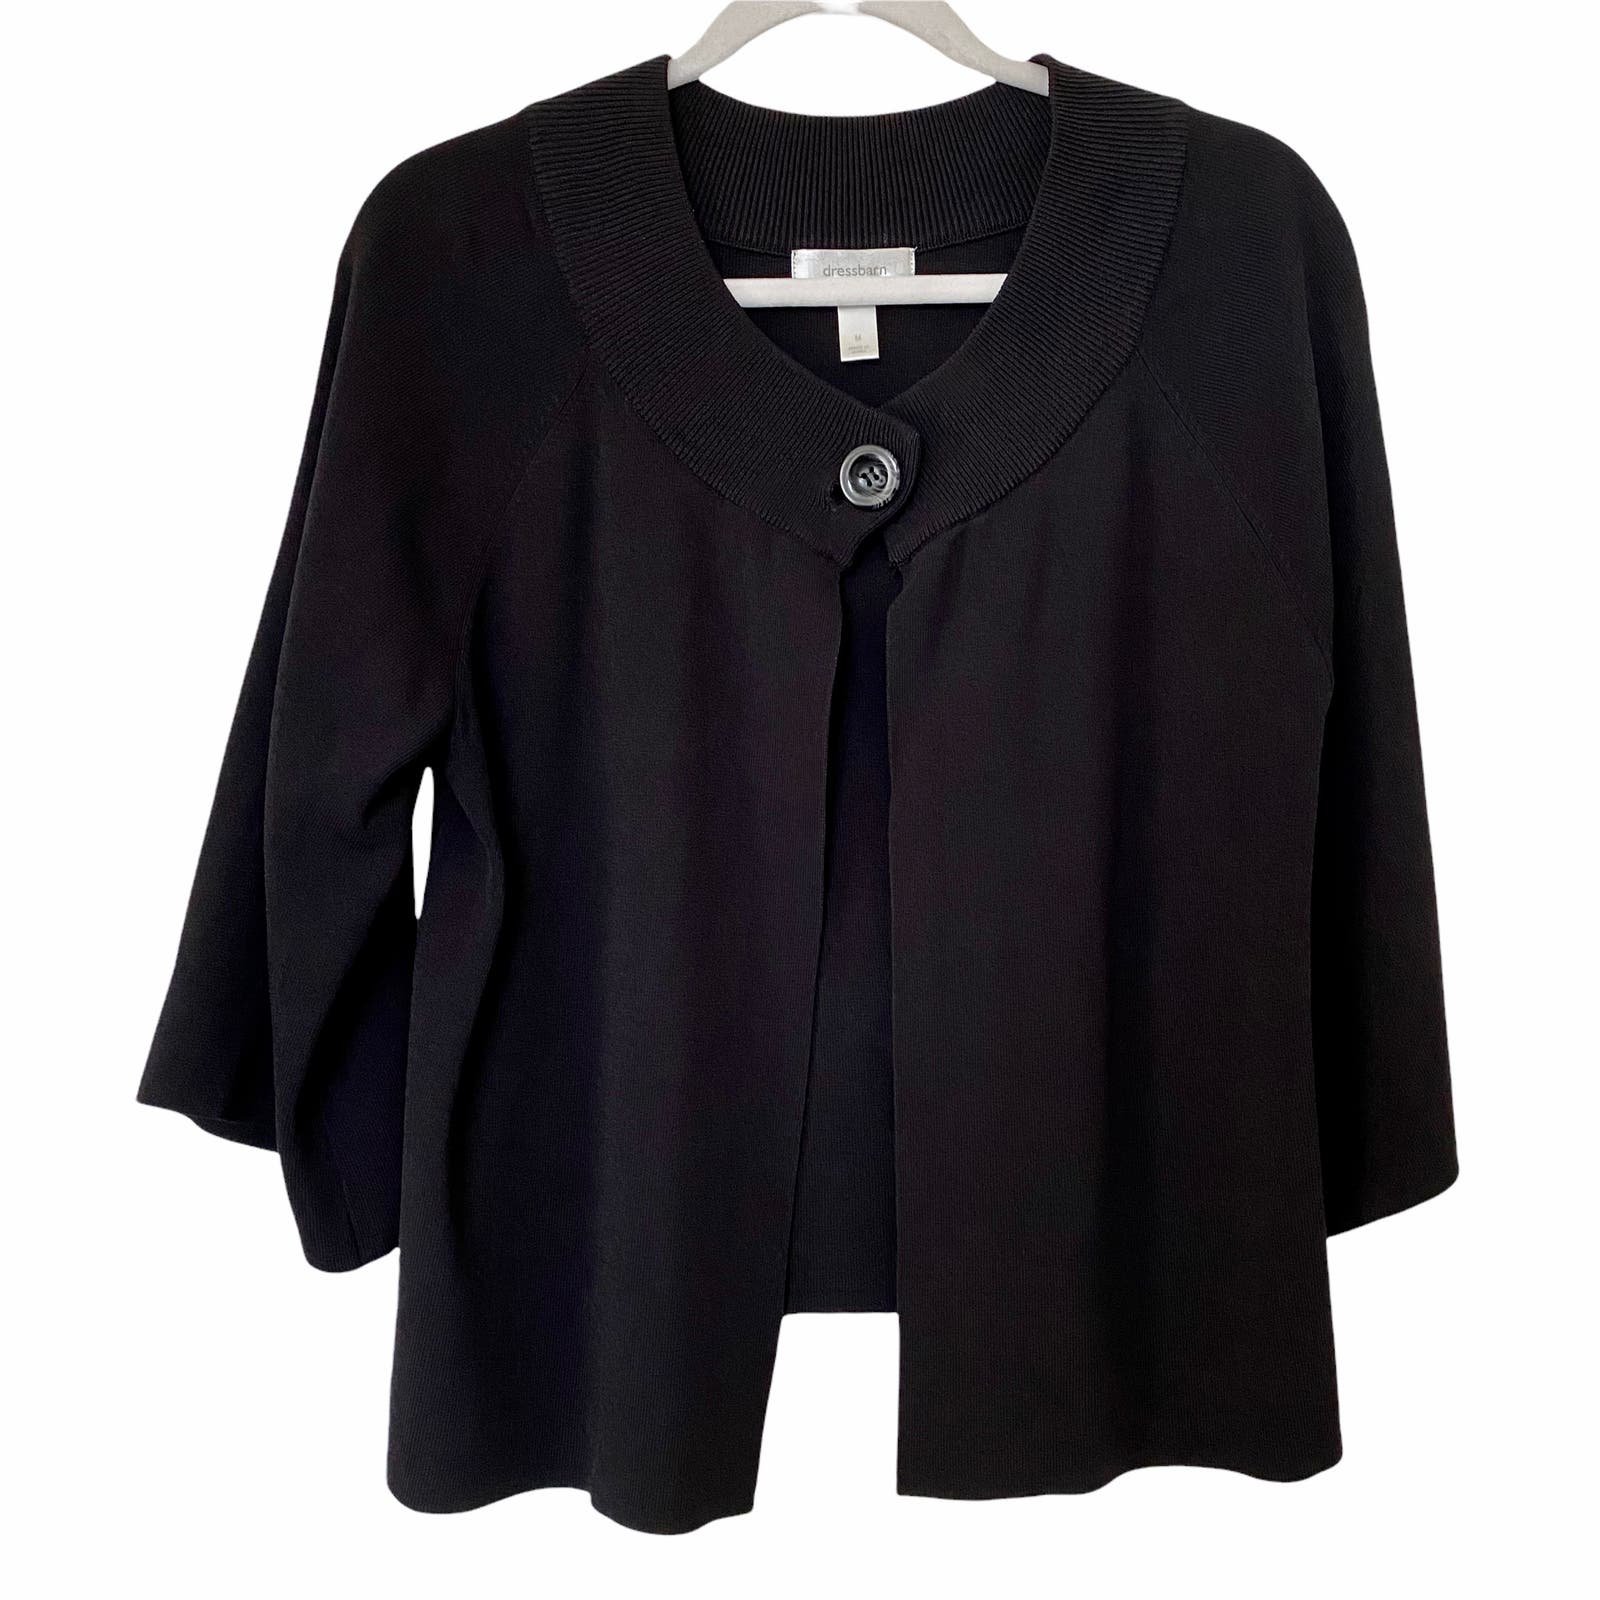 Dressbarn 3/4 Sleeve Black Sweater Shrug Size Medium A0